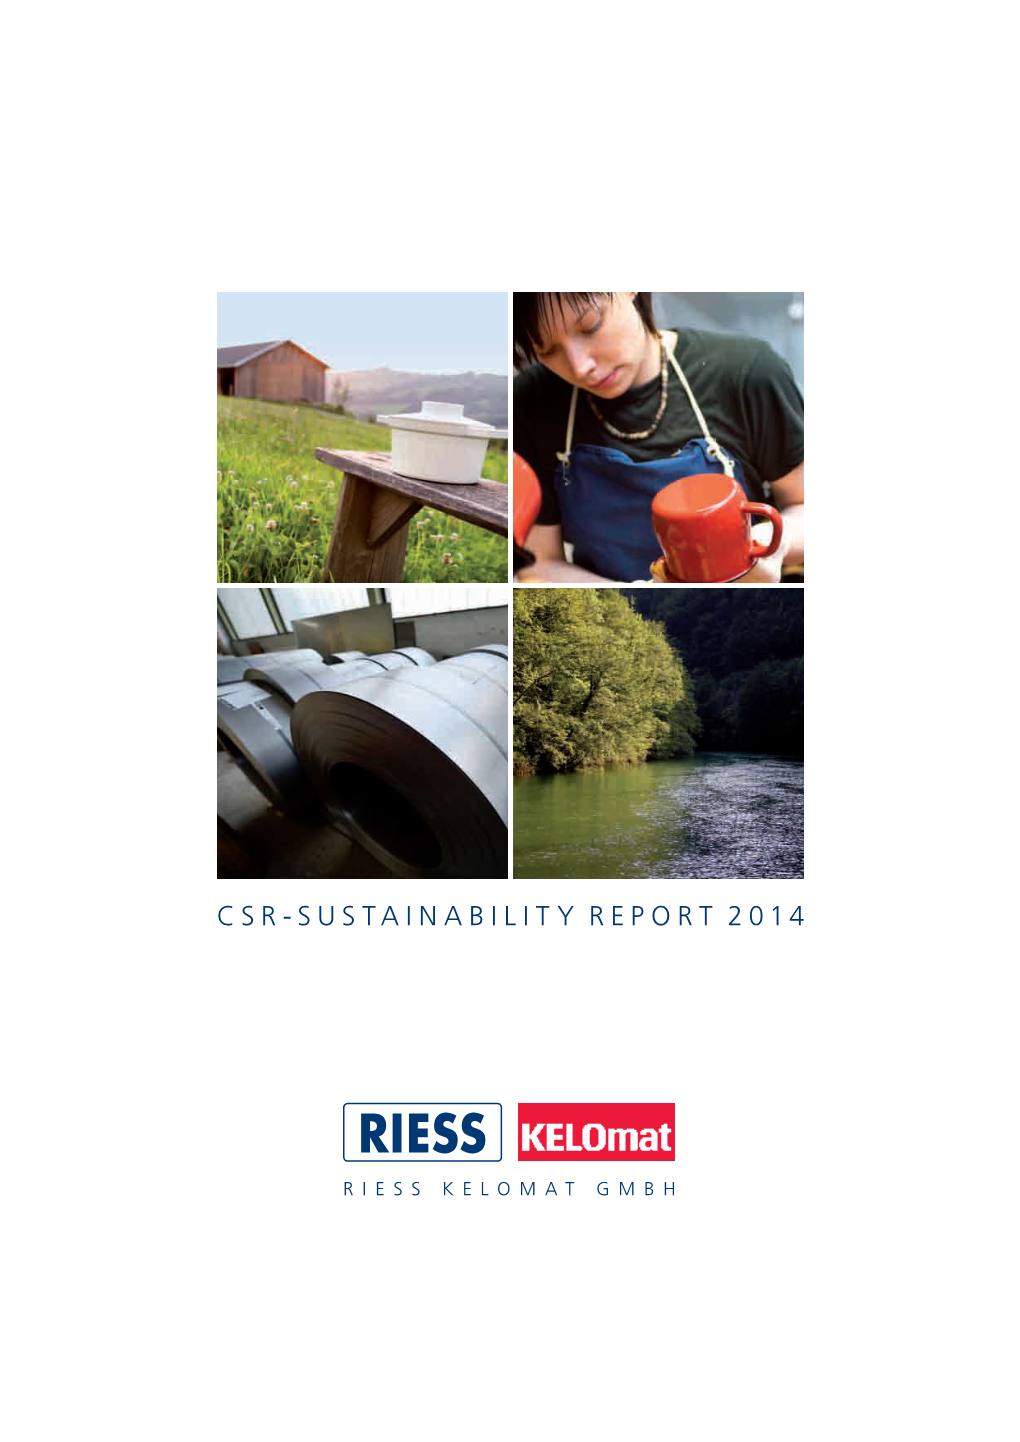 Csr-Sustainability Report 2014